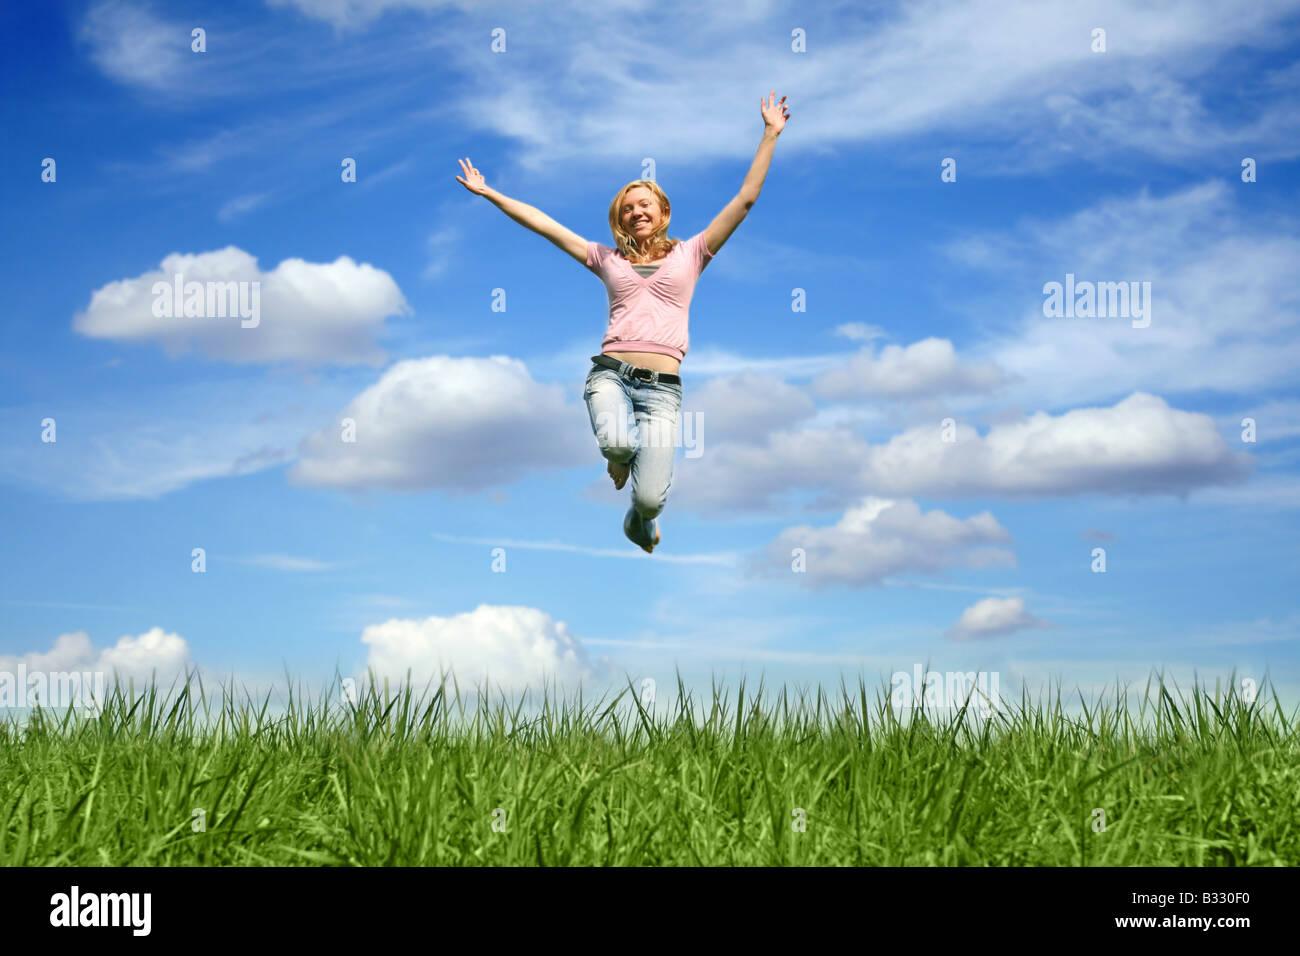 Woman makes air jump Stock Photo